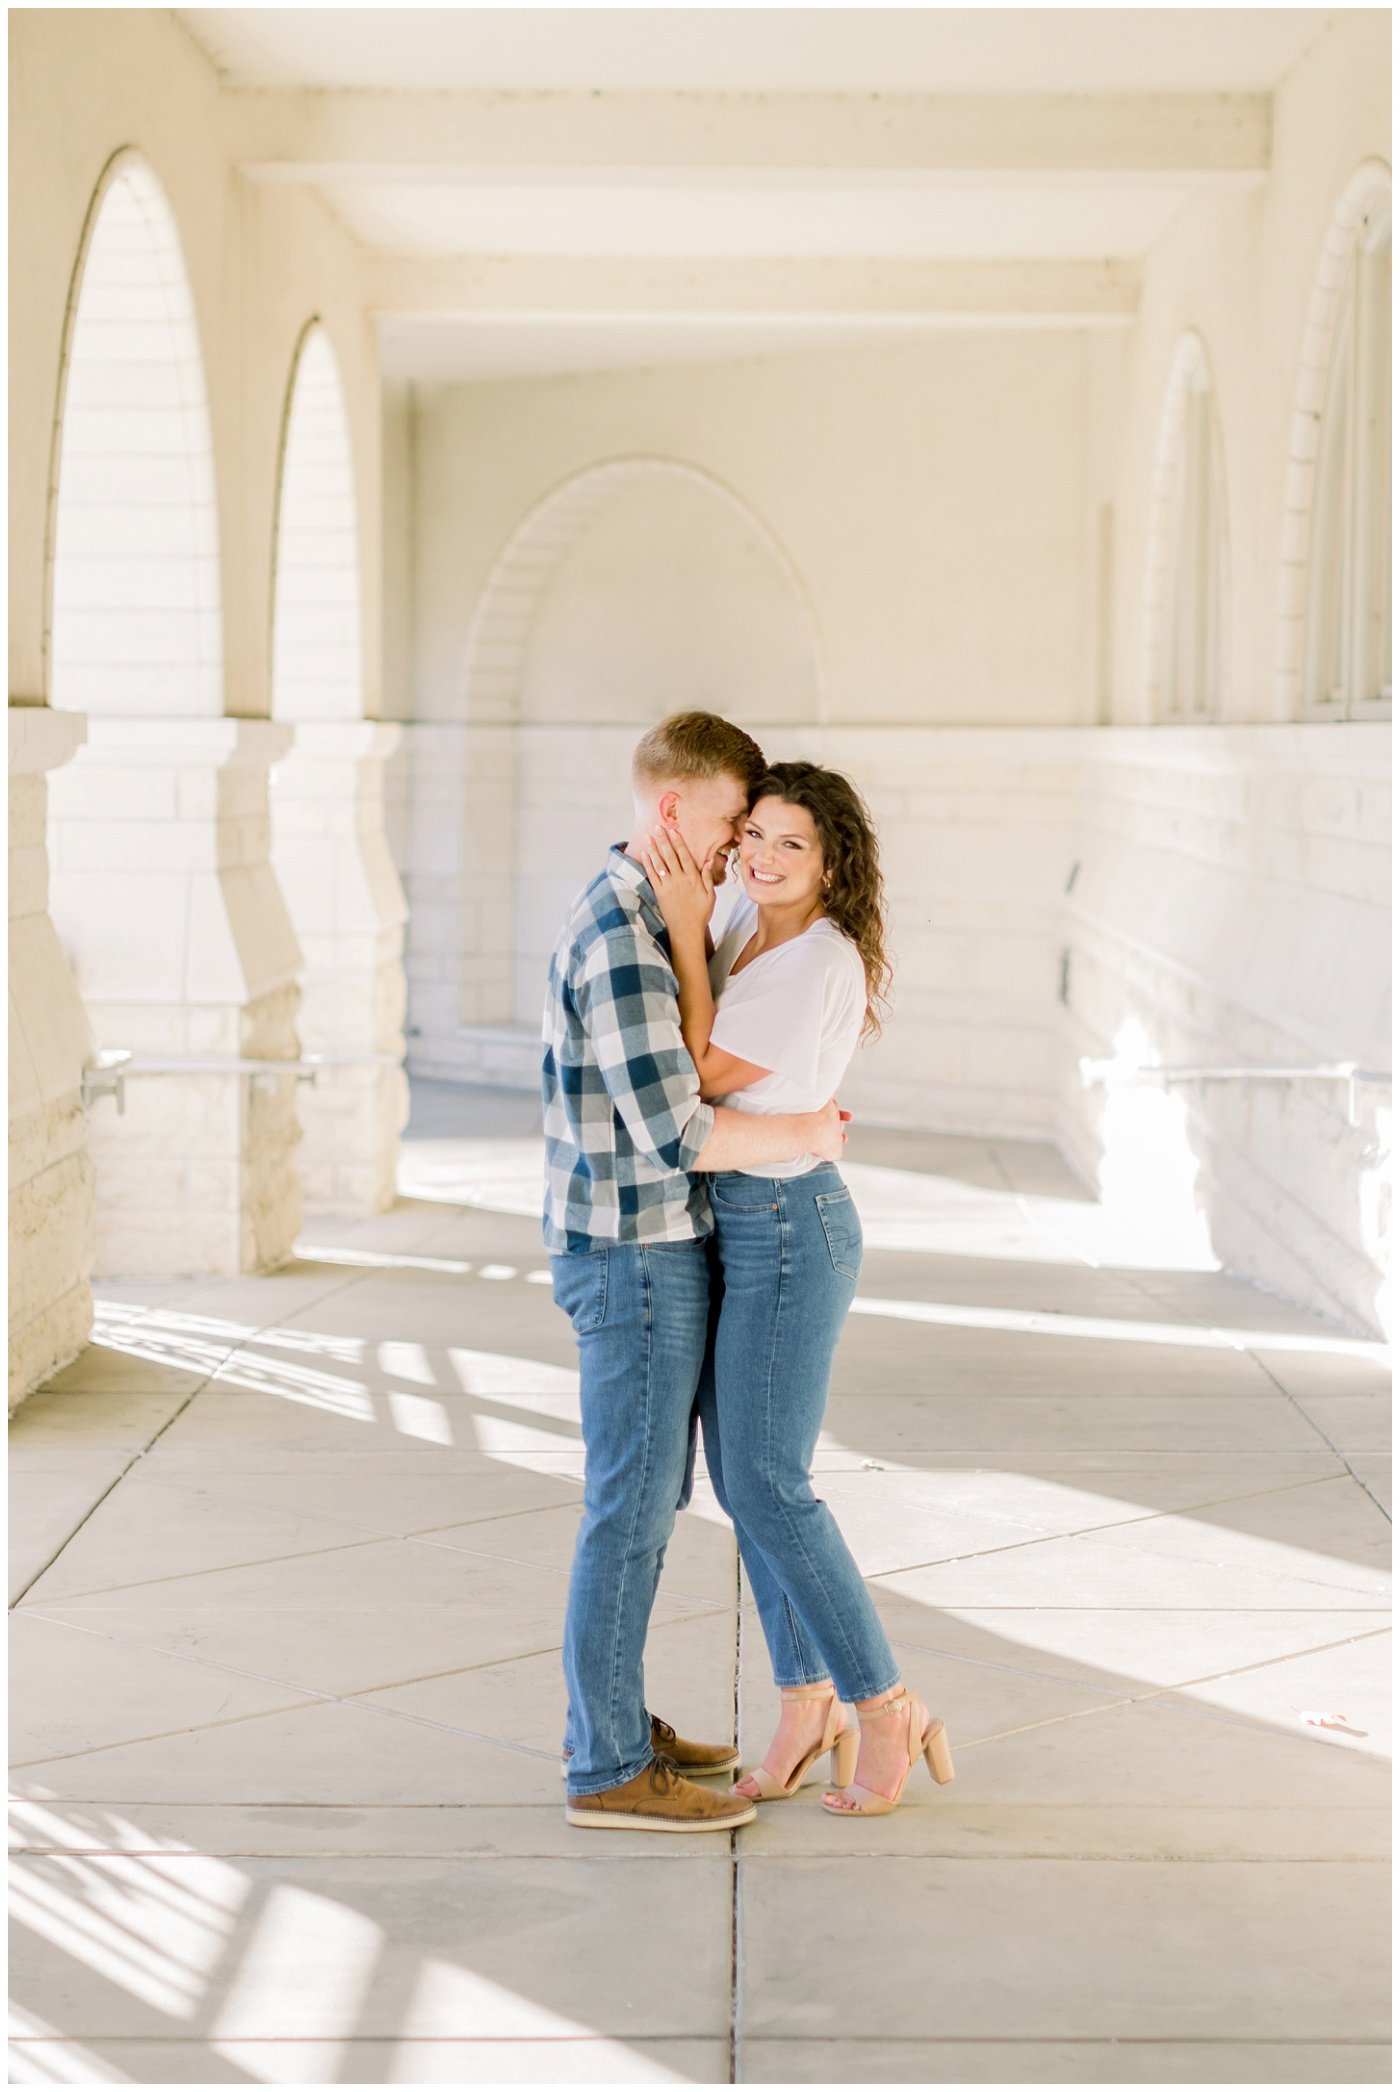 Engagement photos on college campus